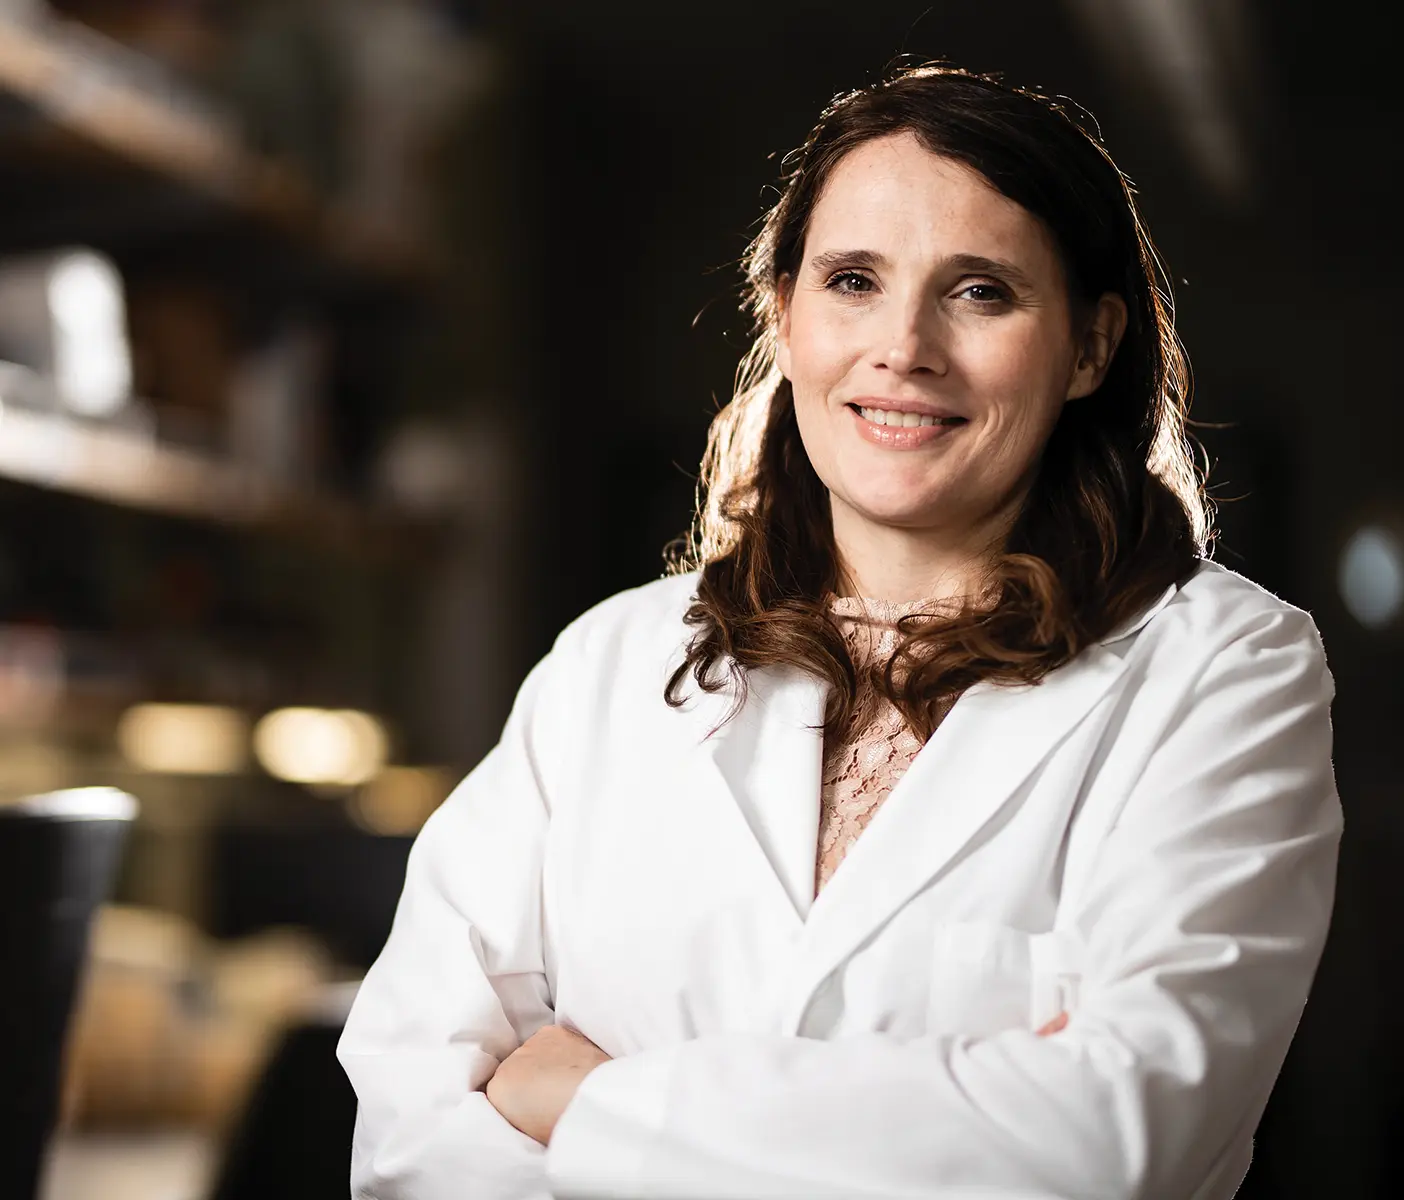 Professor Julianne Grose poses in a lab coat.